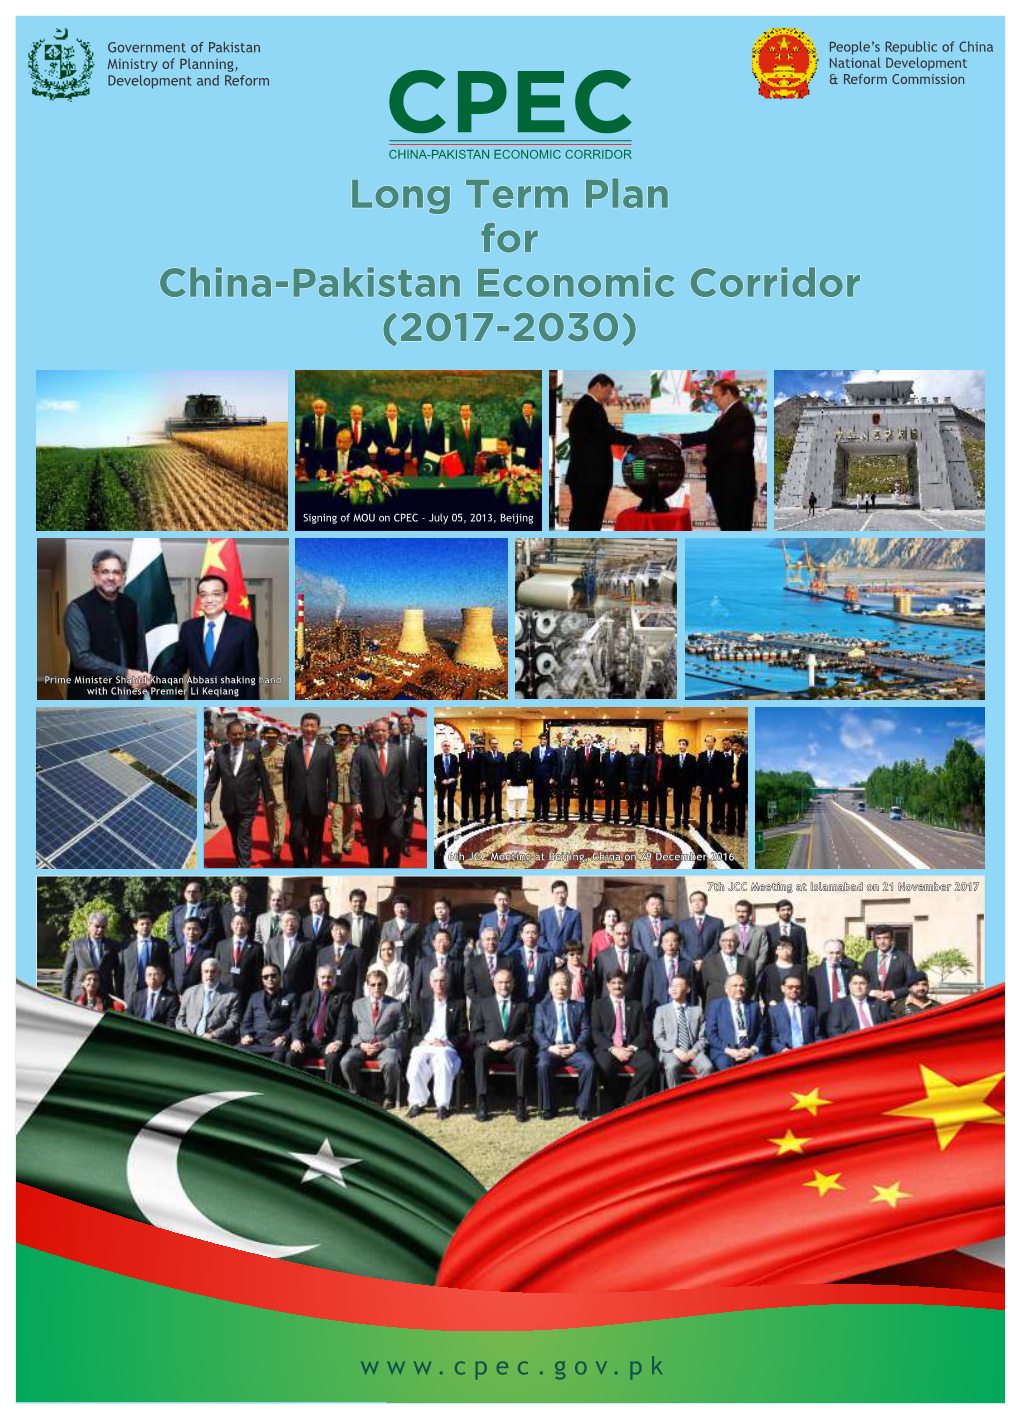 Long Term Plan for China-Pakistan Economic Corridor (2017-2030)